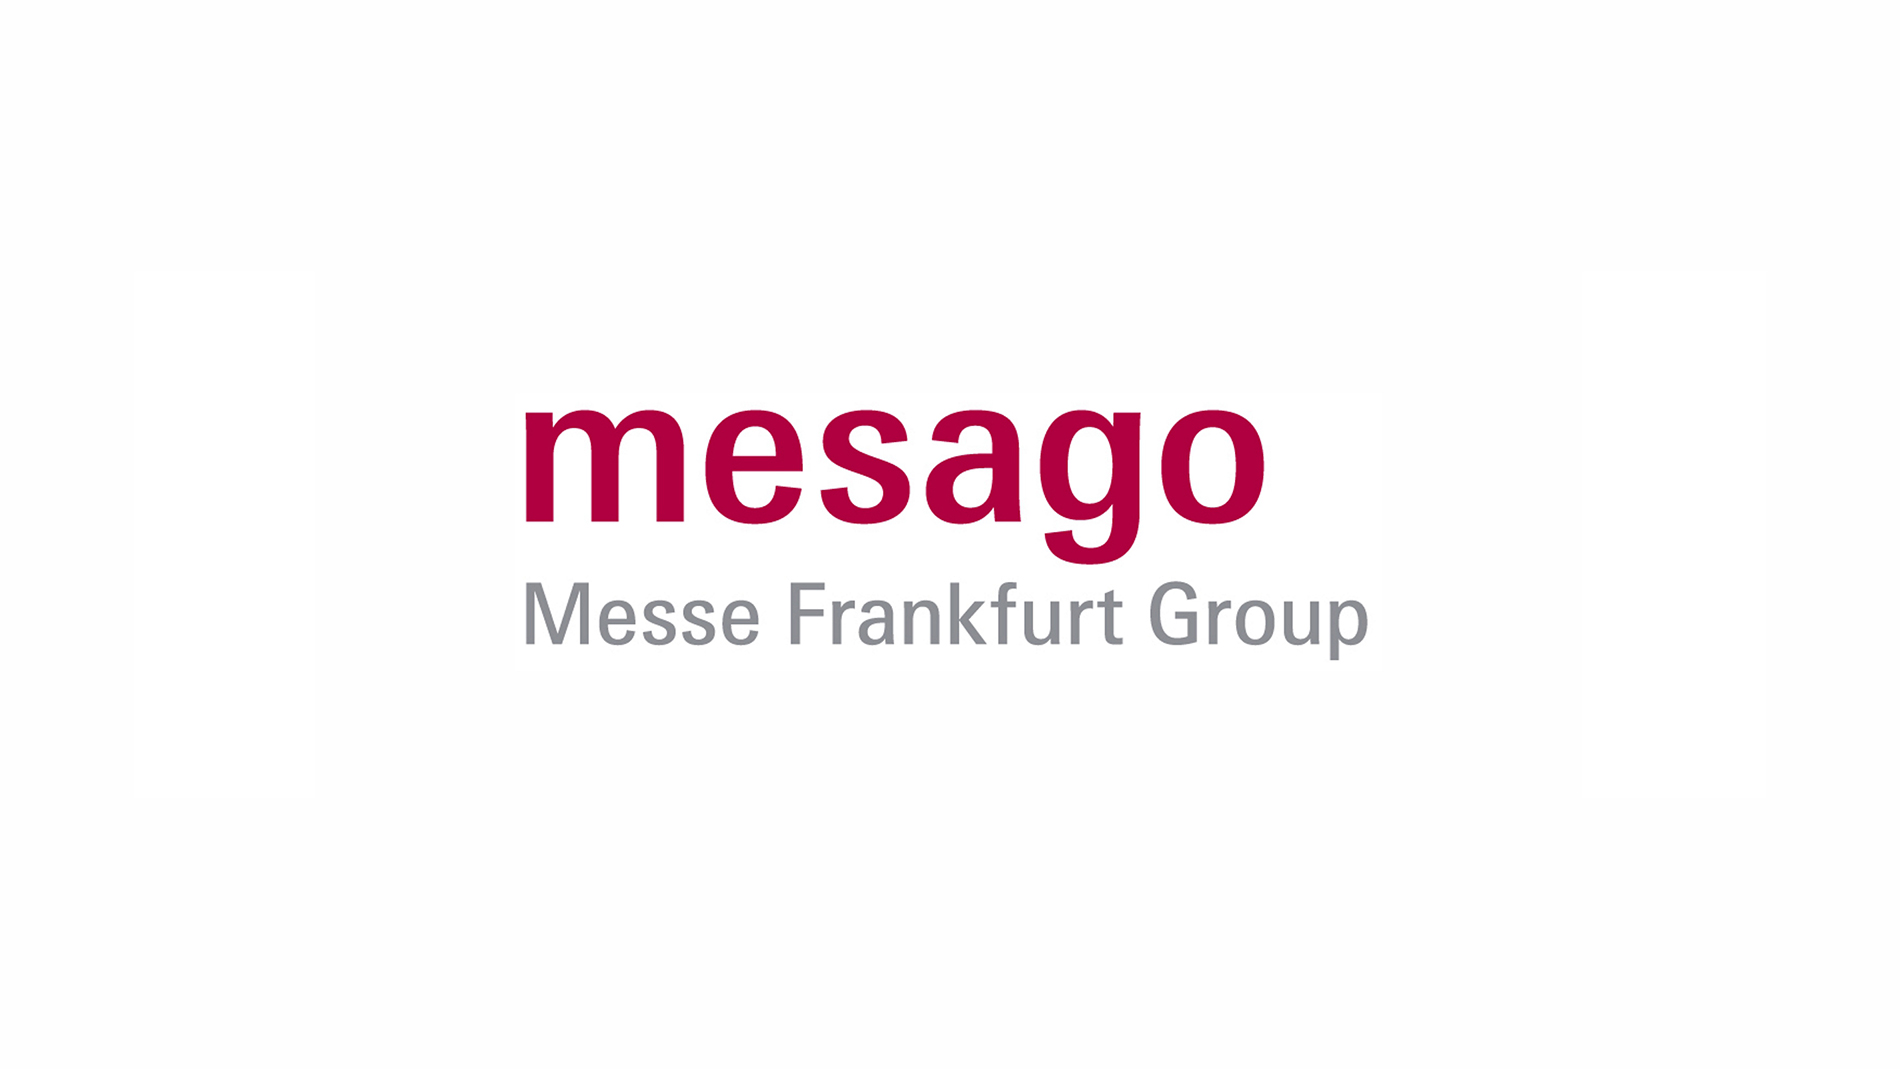 Complete portfolio of Mesago Messe Frankfurt GmbH